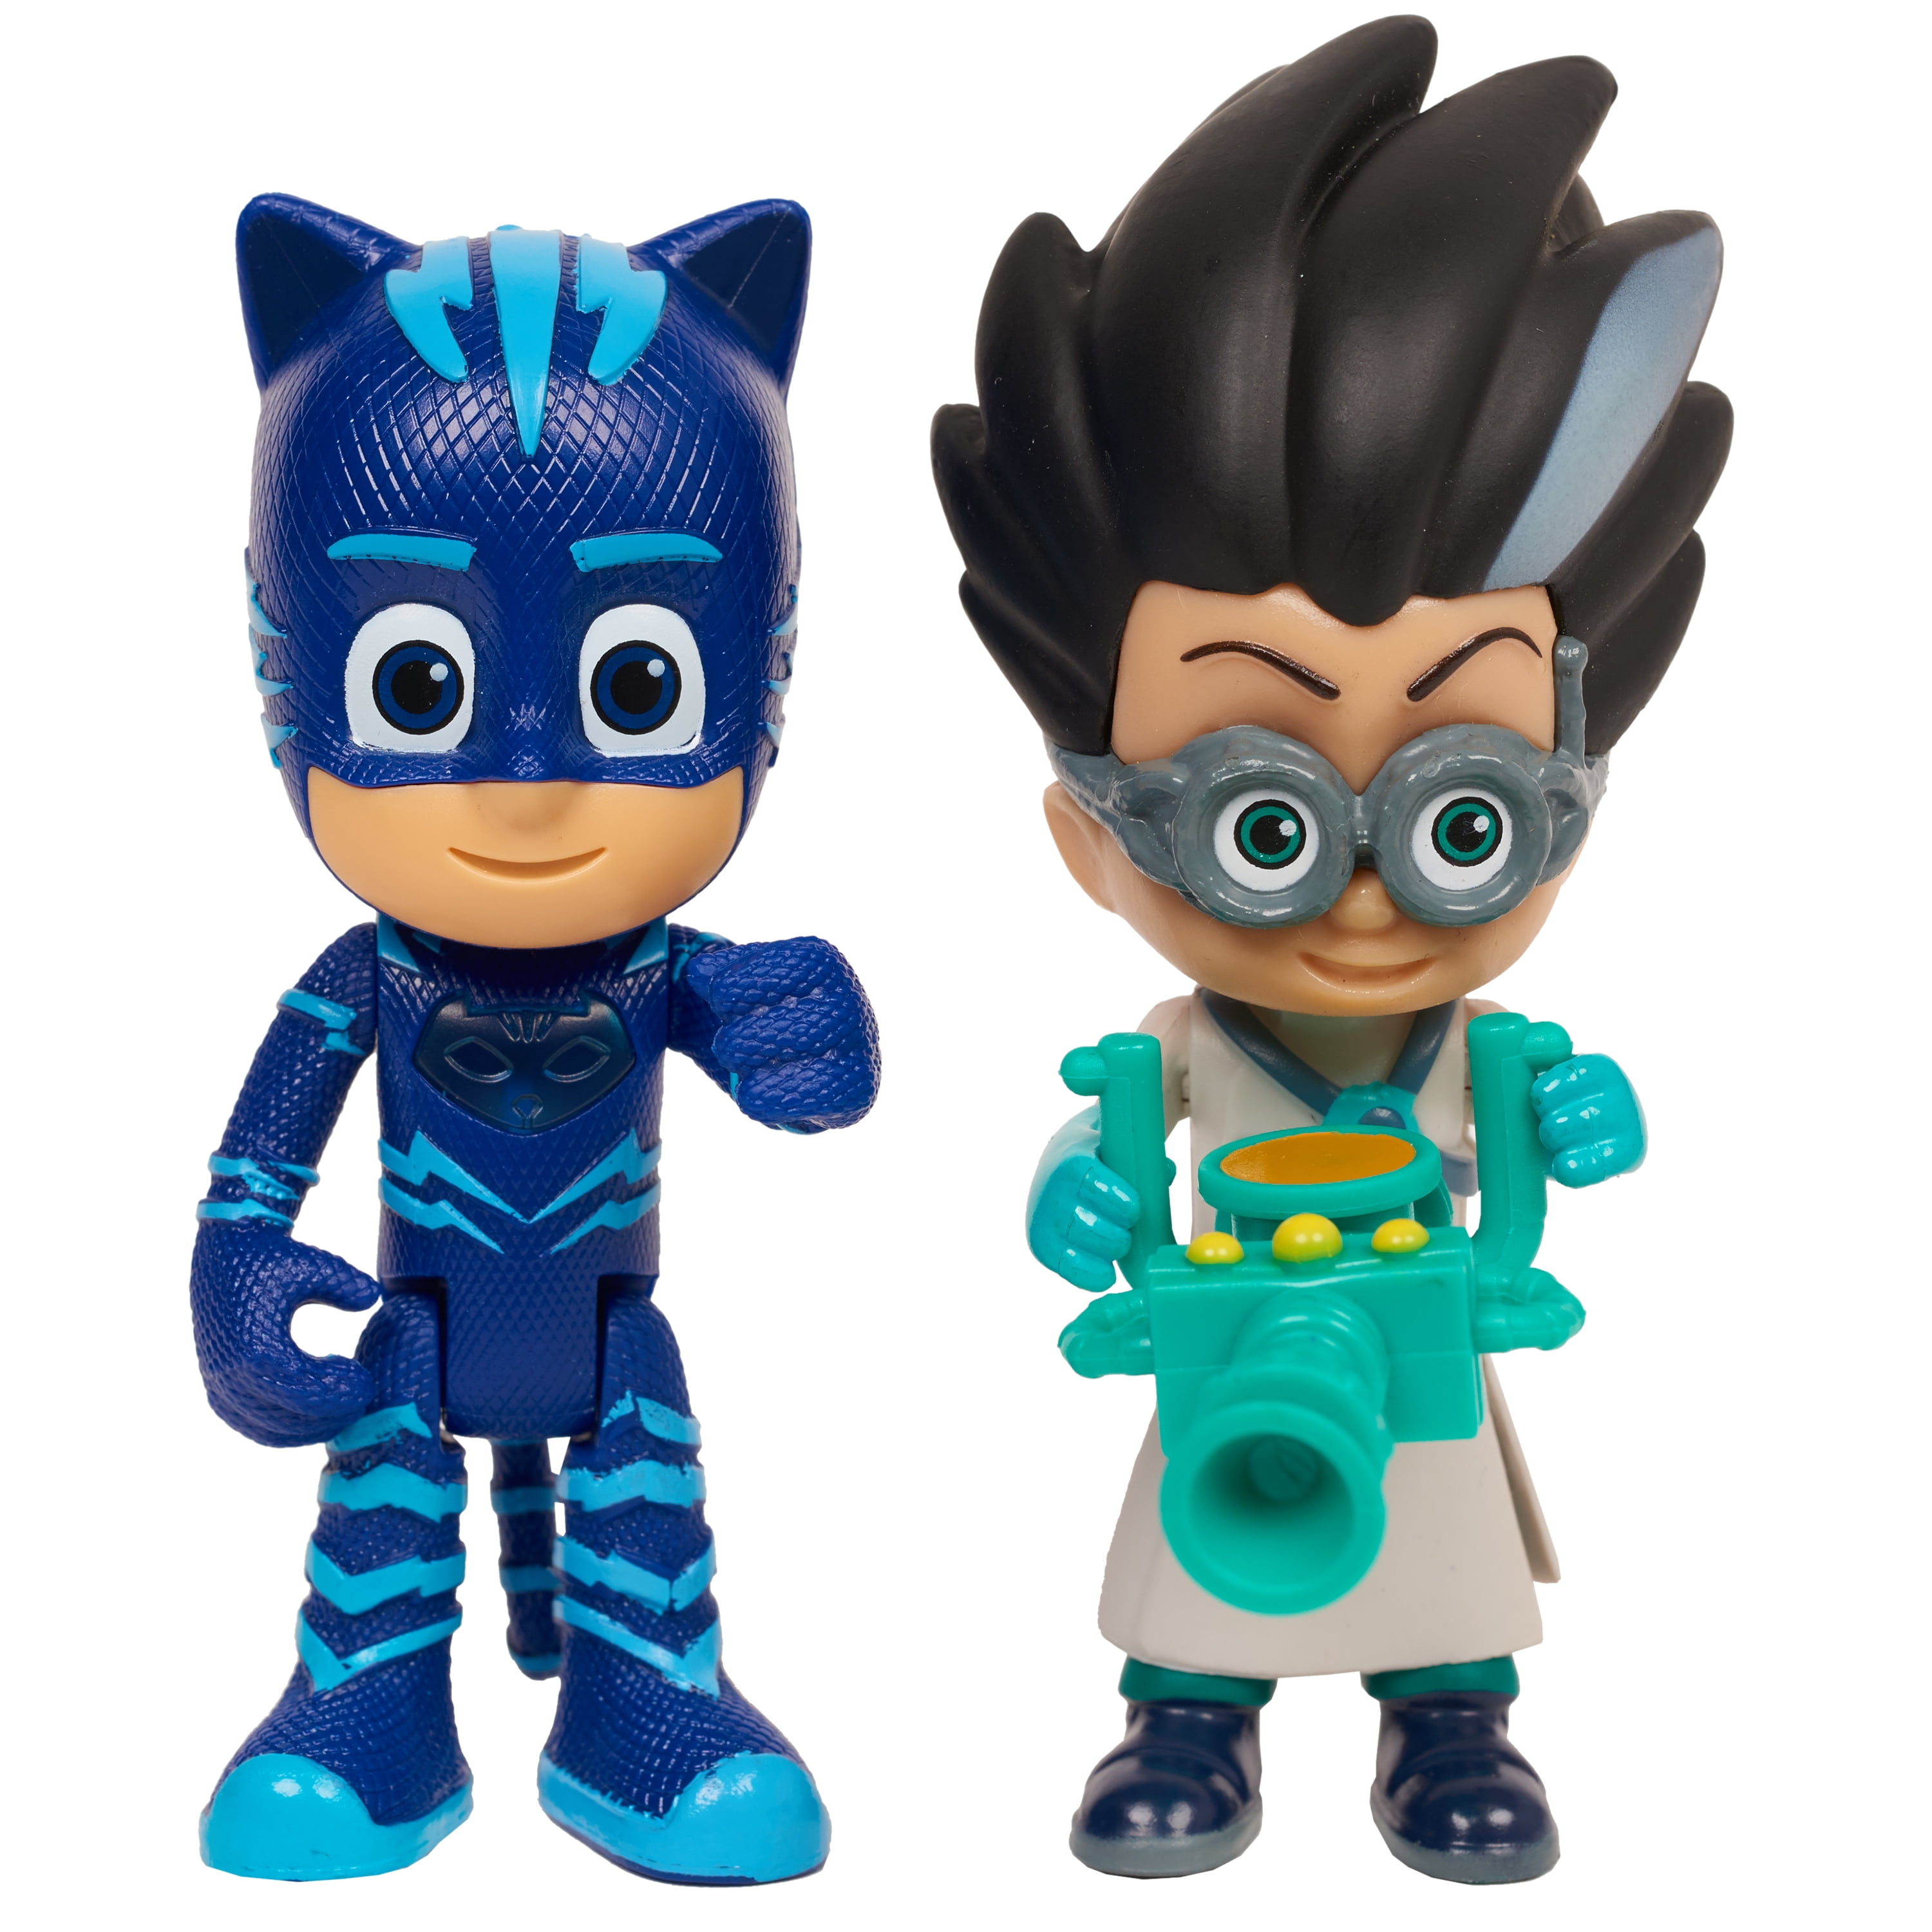 PJ Masks Light Up Hero and Villian 2-Pack Figure Set - Catboy vs